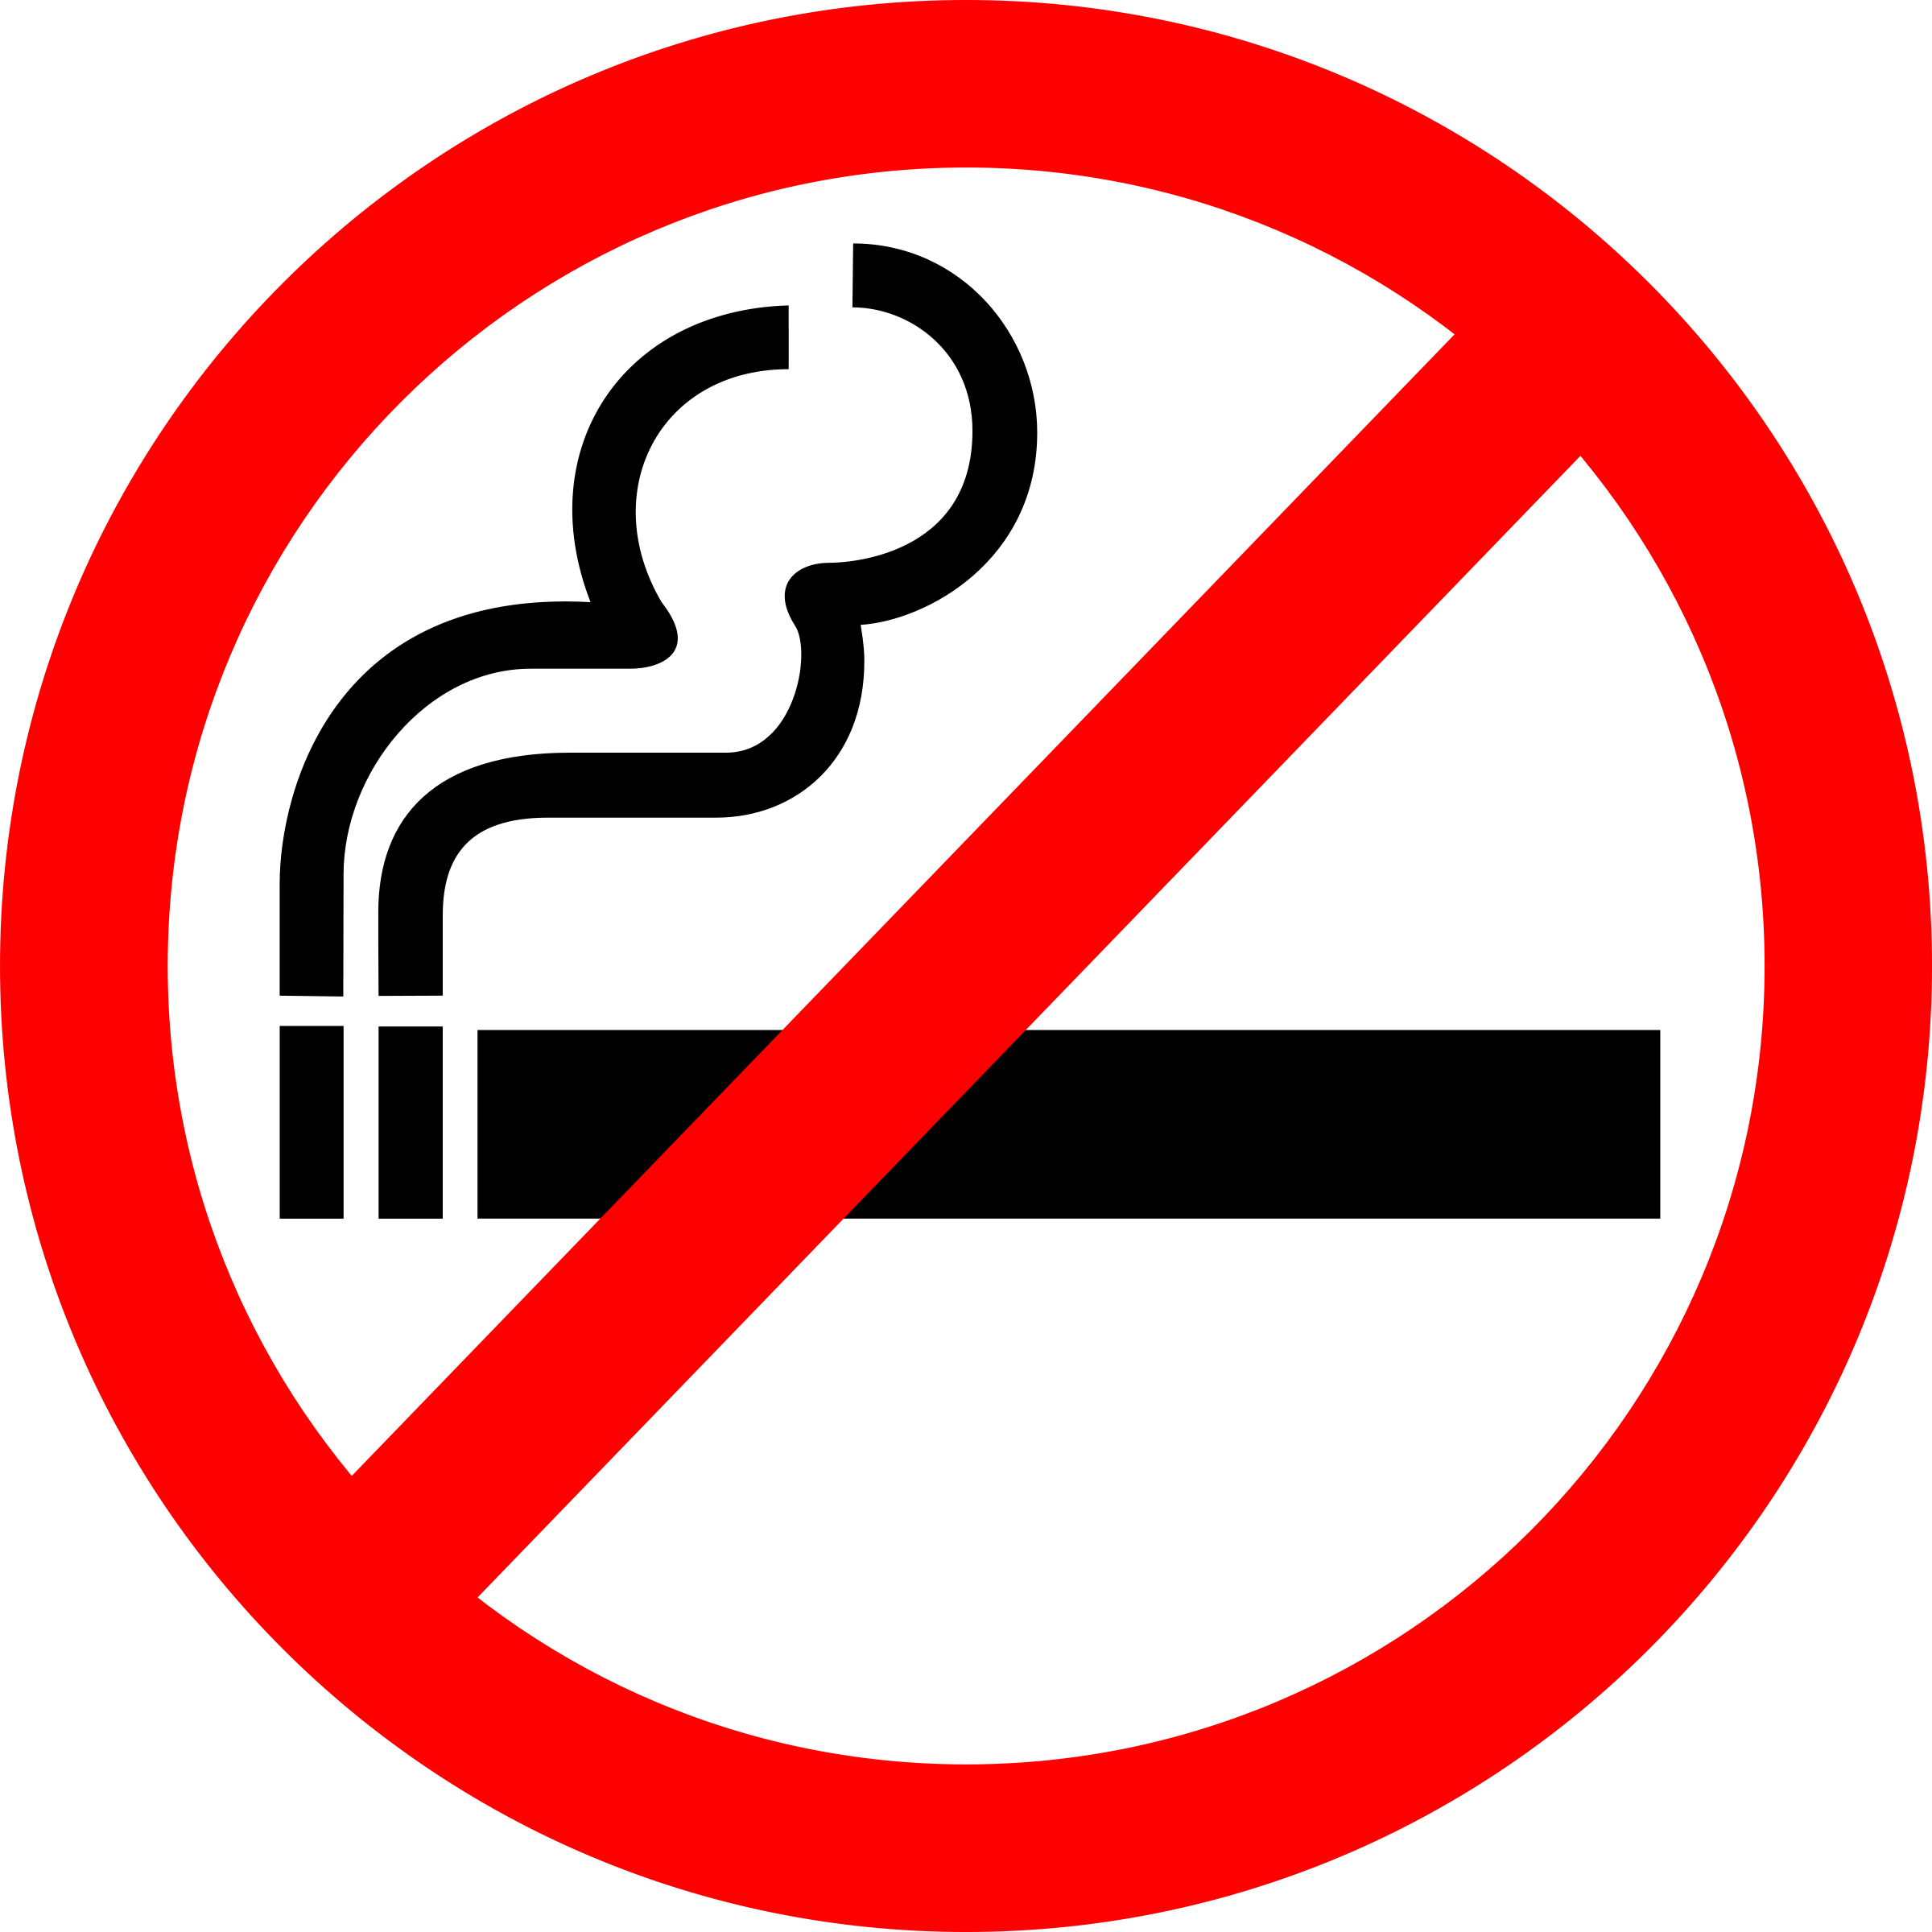 World No Tobacco Day: Letu002